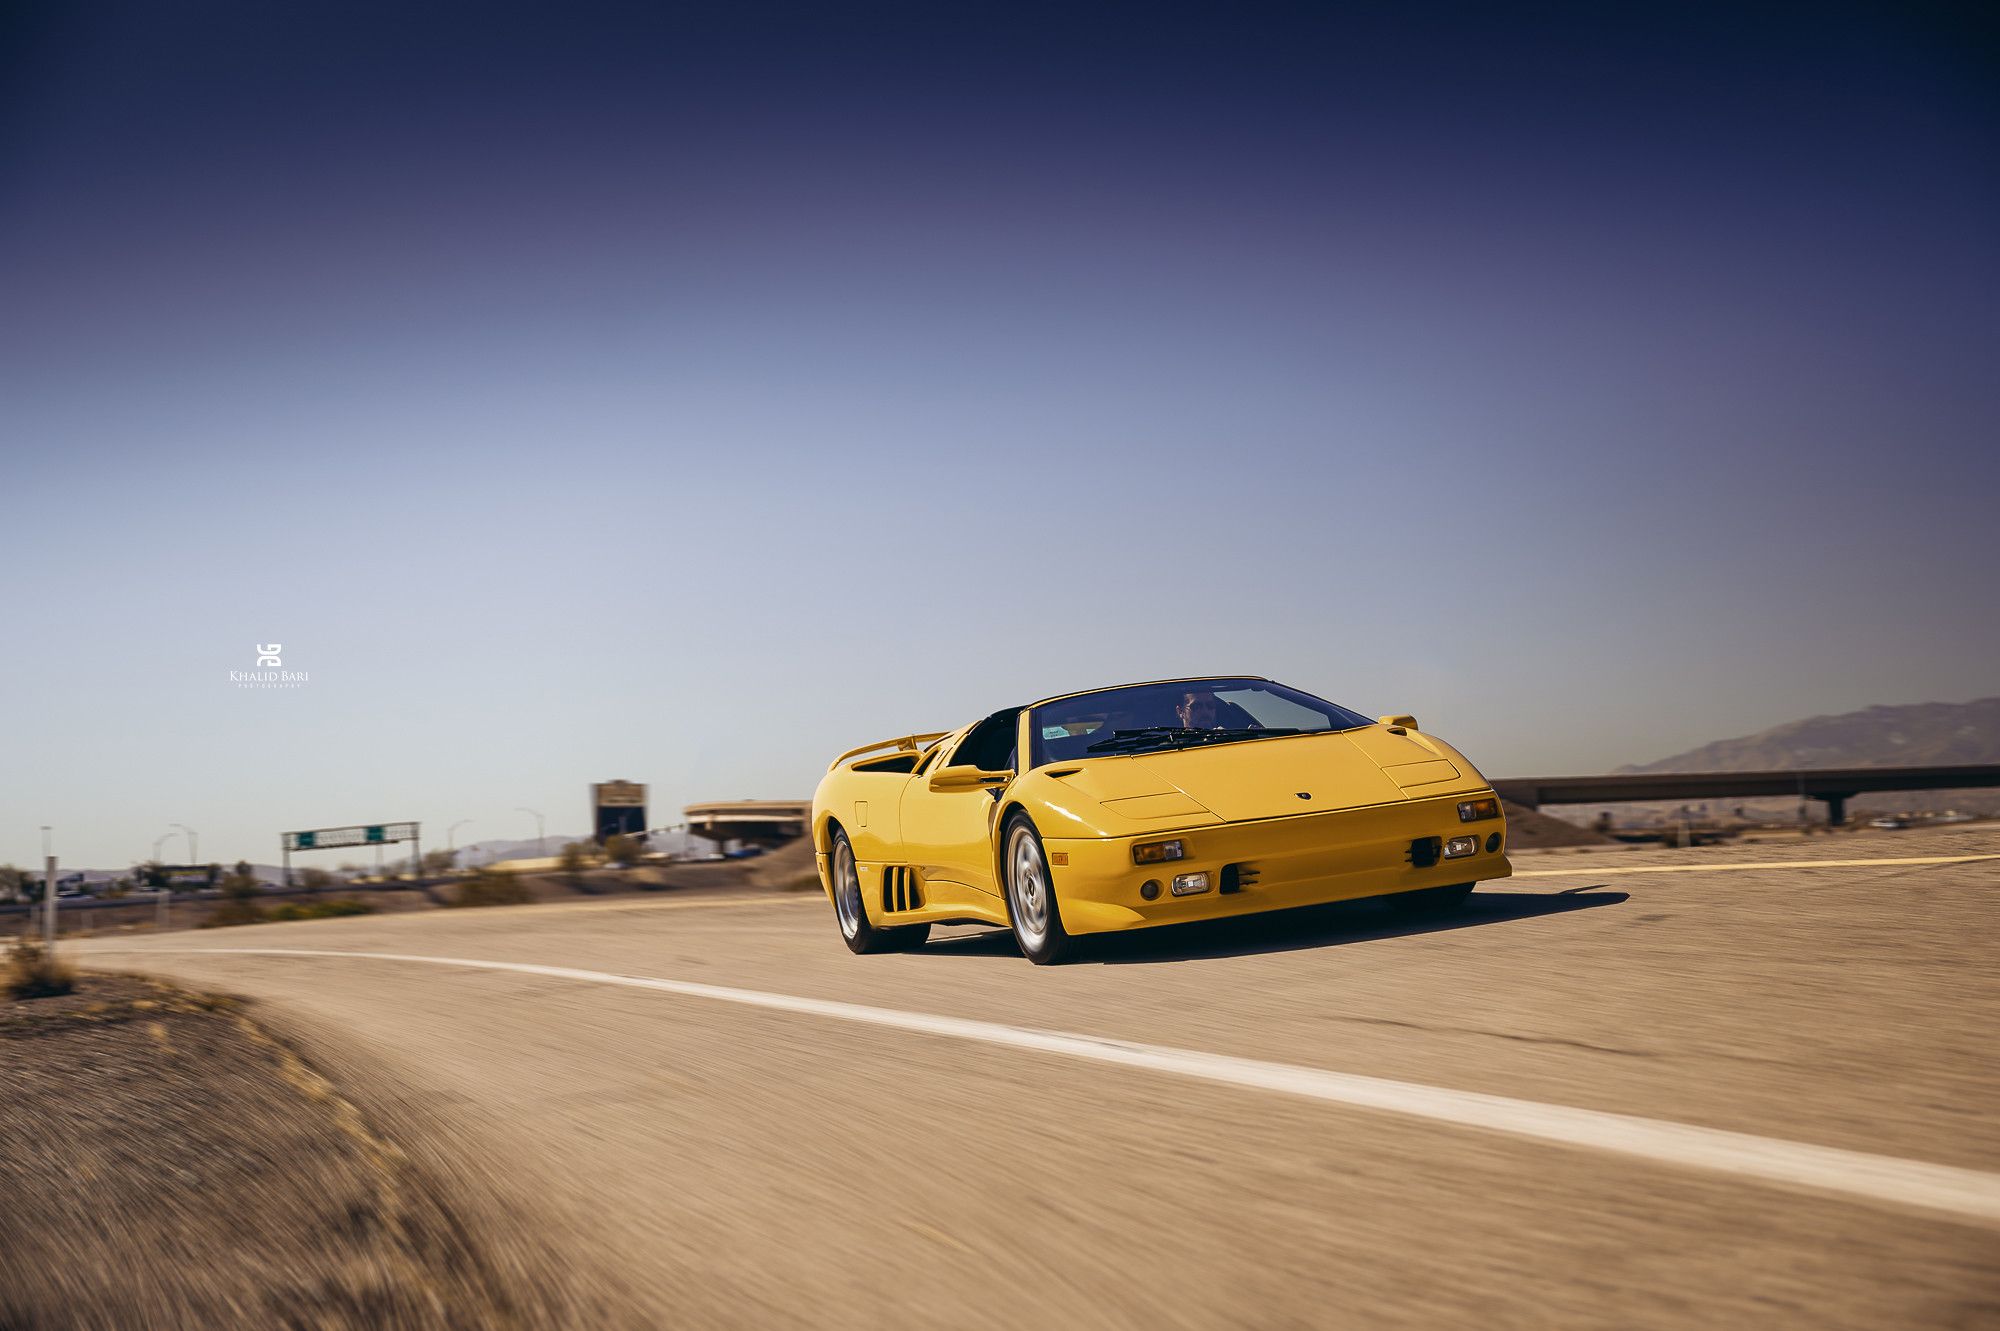 Yellow Lamborghini Diablo speeding down the highway